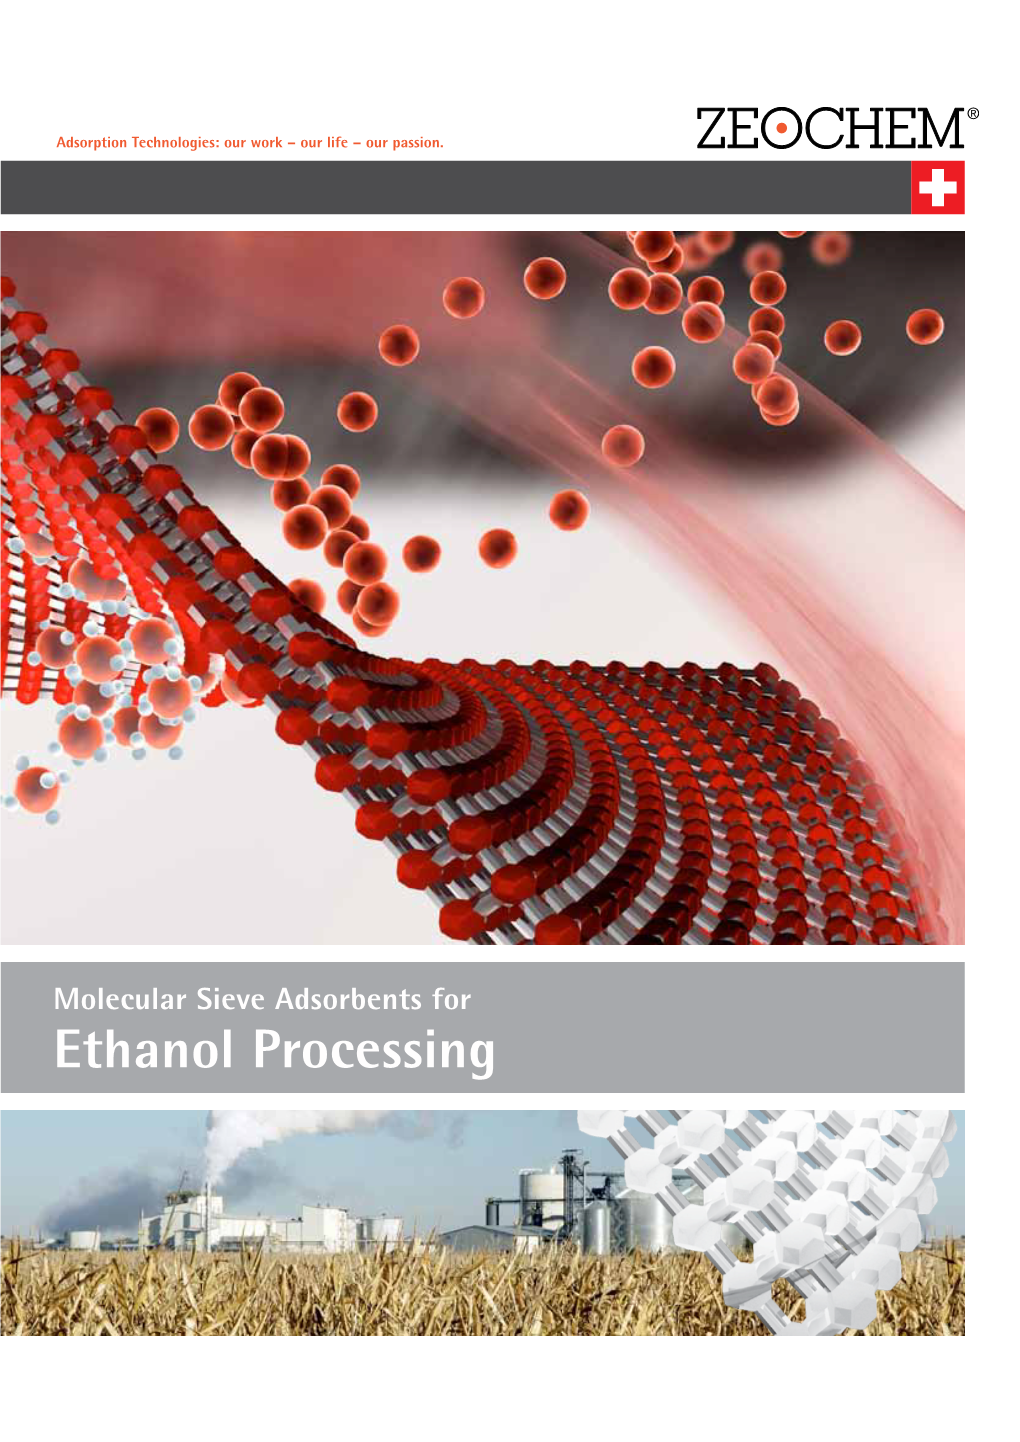 Molecular Sieve Adsorbents for Ethanol Processing Zeochem Products for the Ethanol Processing Industry Zeochem Products for the Ethanol Processing Industry